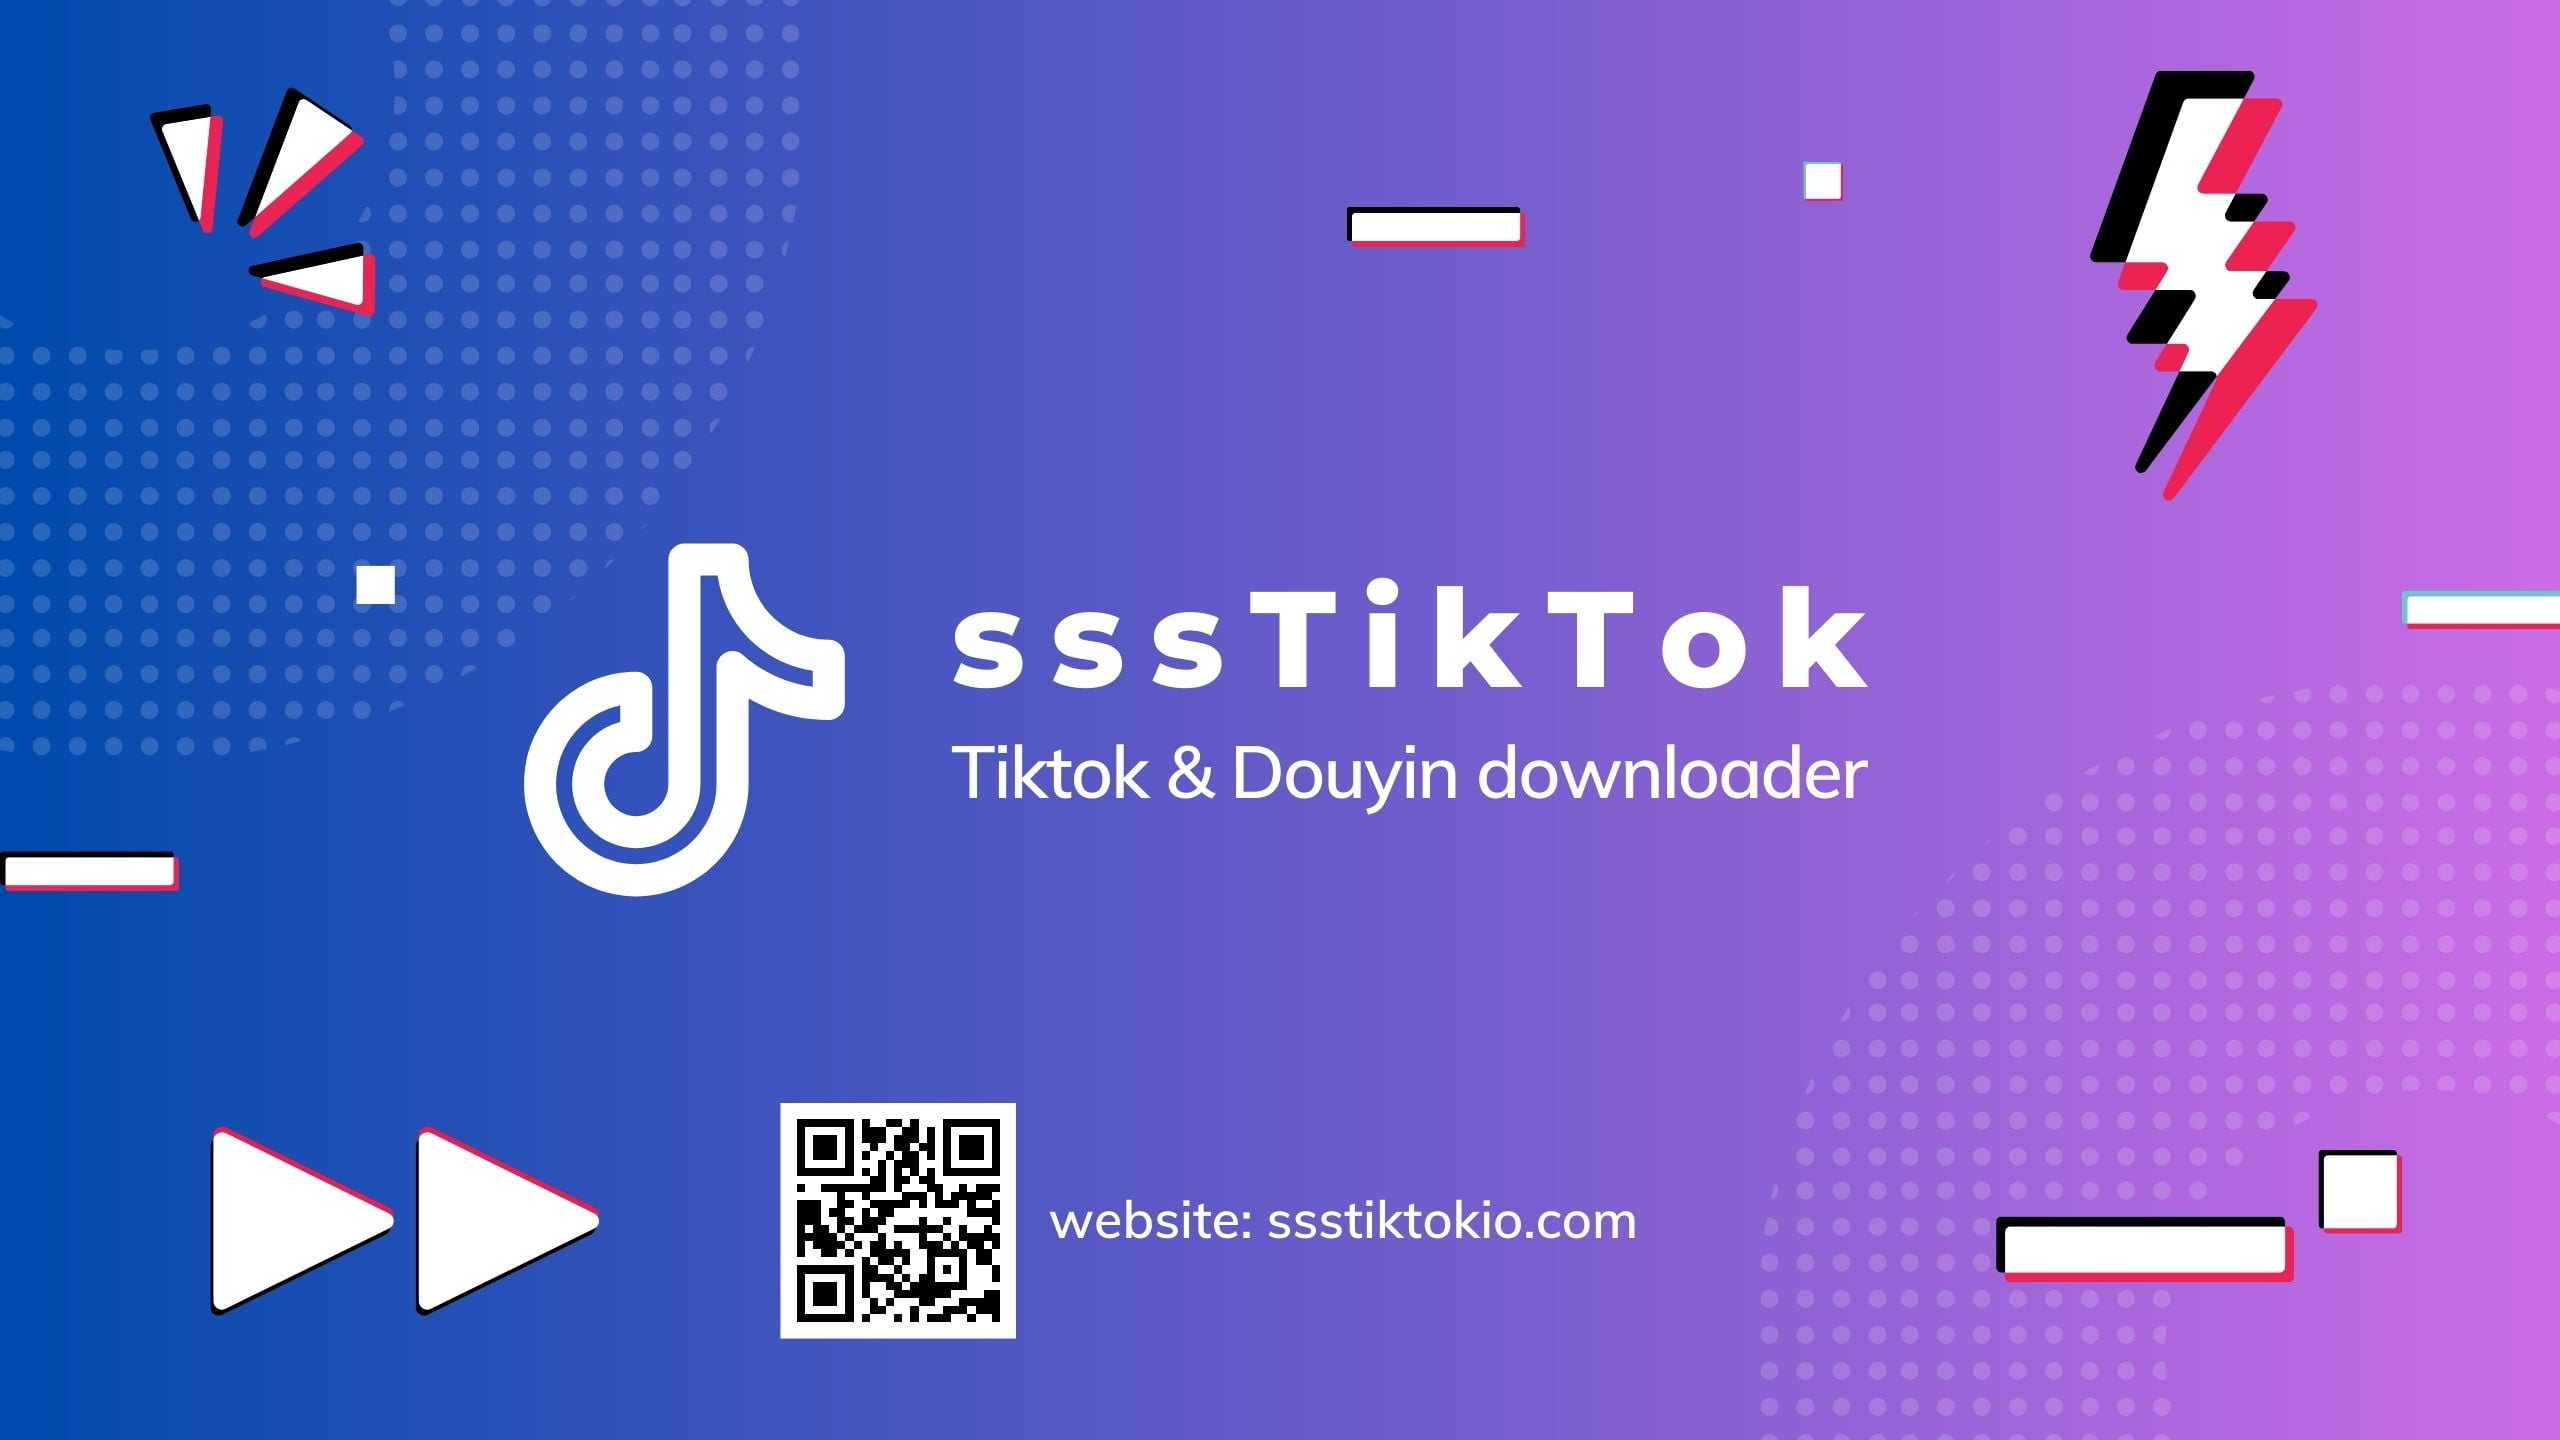 sssTiktok – Downloader Tiktok online. Scarica video Tiktok gratuitamente e senza limiti.